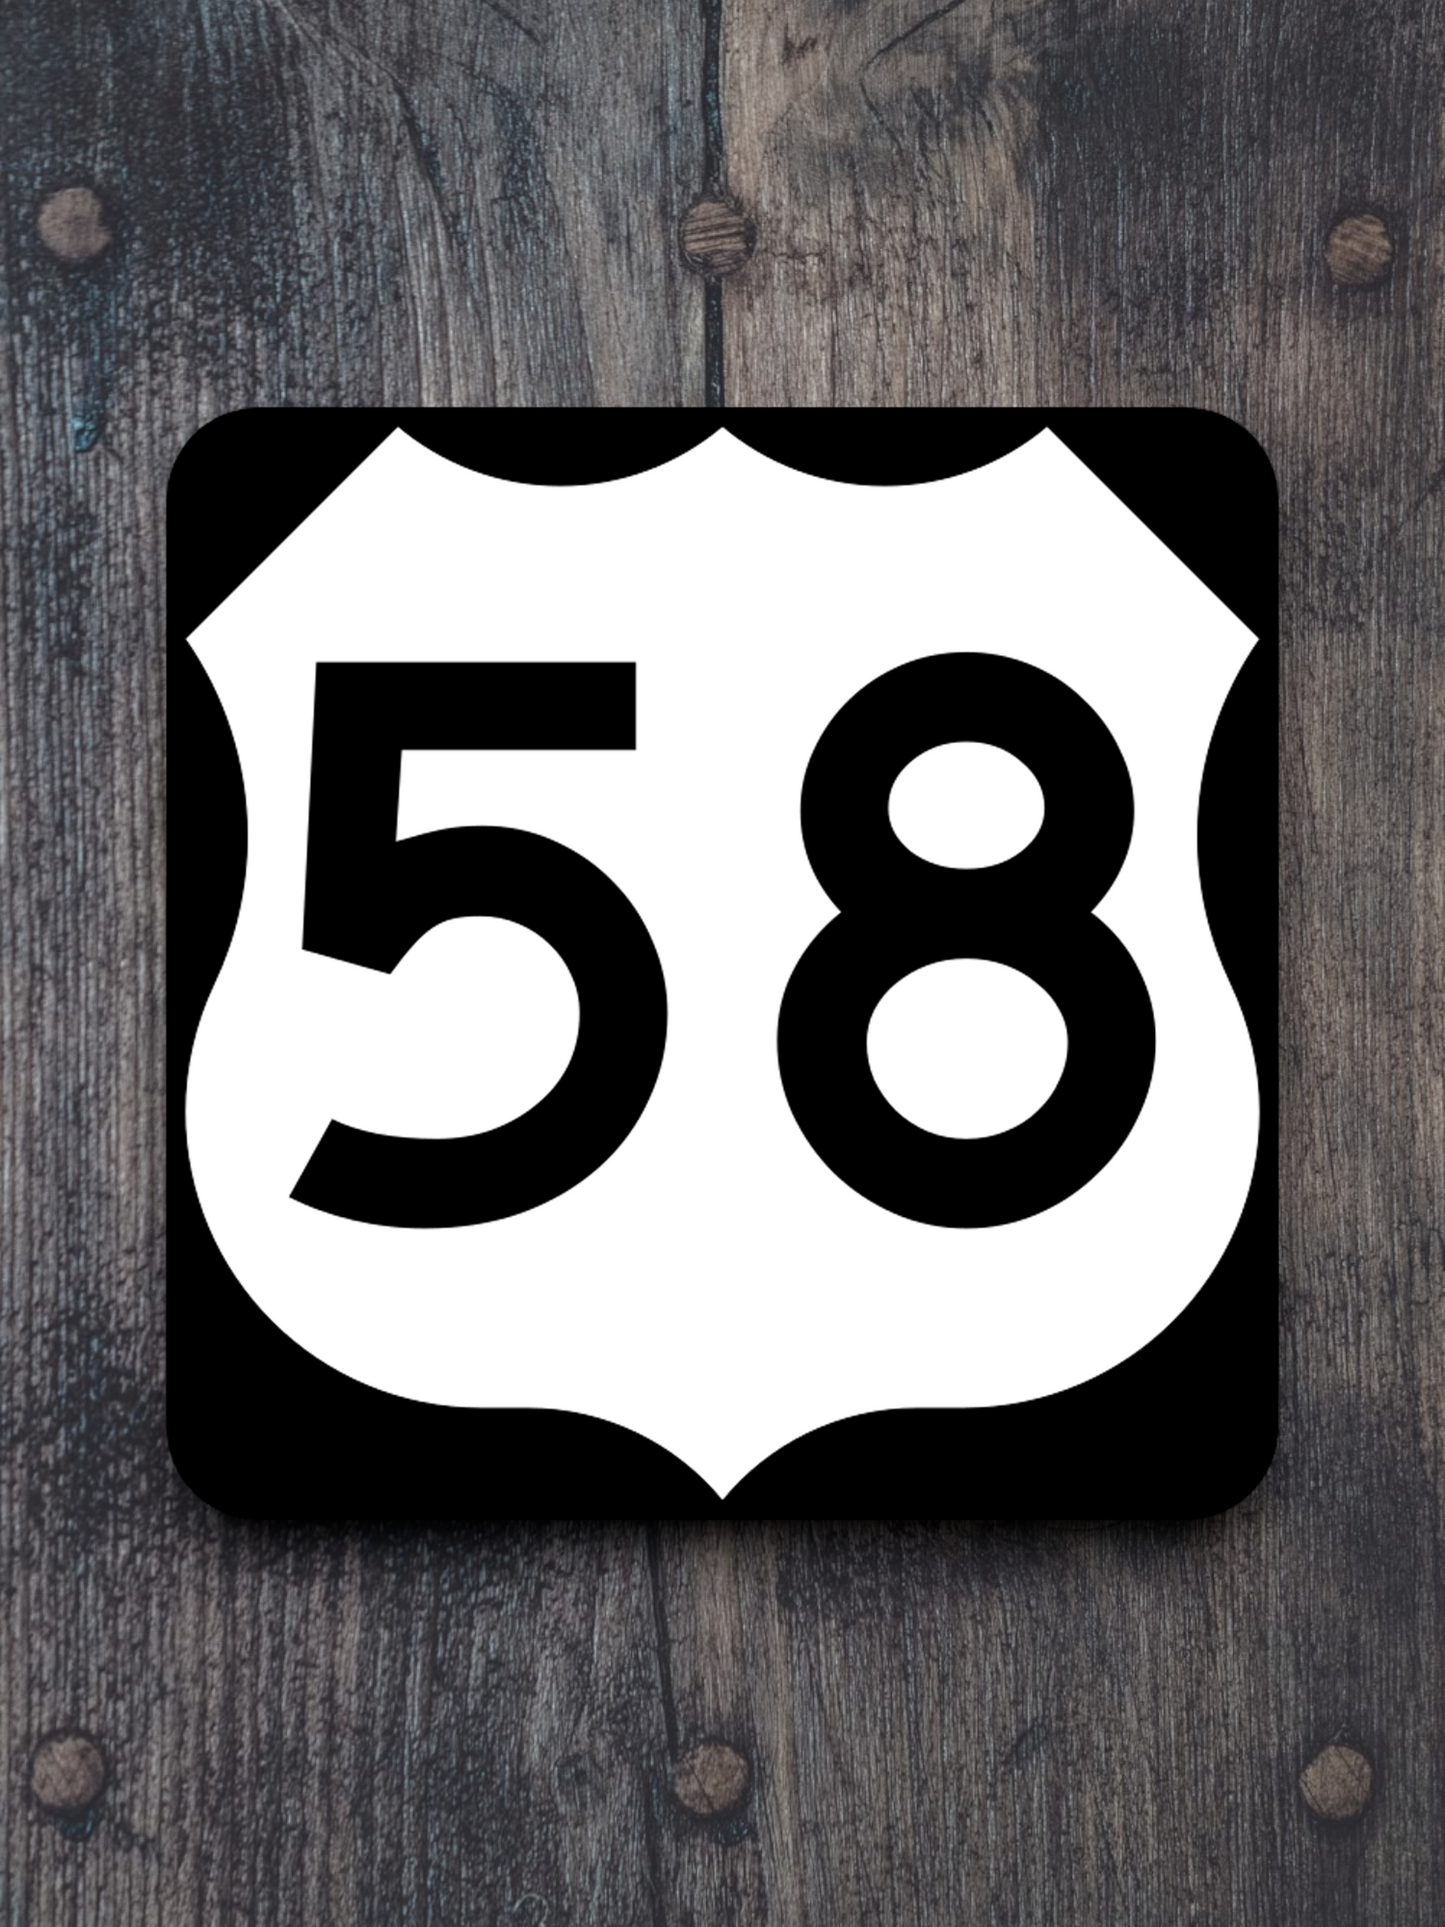 U.S. Route 58 Road Sign Sticker